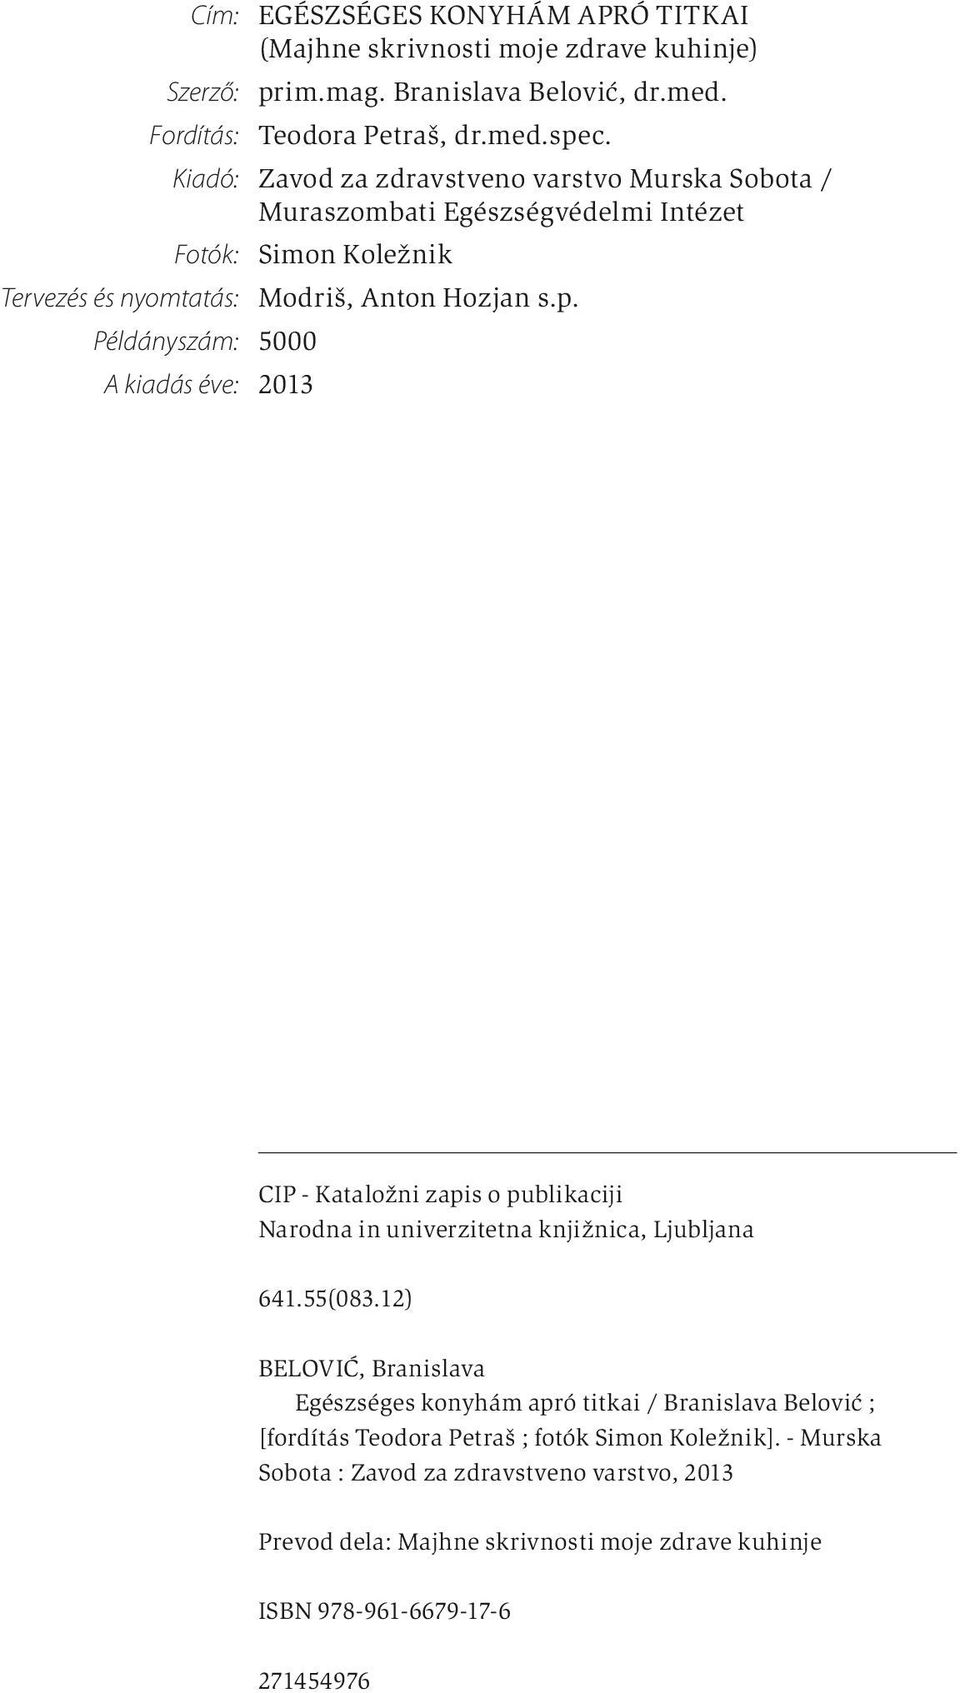 Példányszám: 5000 A kiadás éve: 2013 CIP - Kataložni zapis o publikaciji Narodna in univerzitetna knjižnica, Ljubljana 641.55(083.